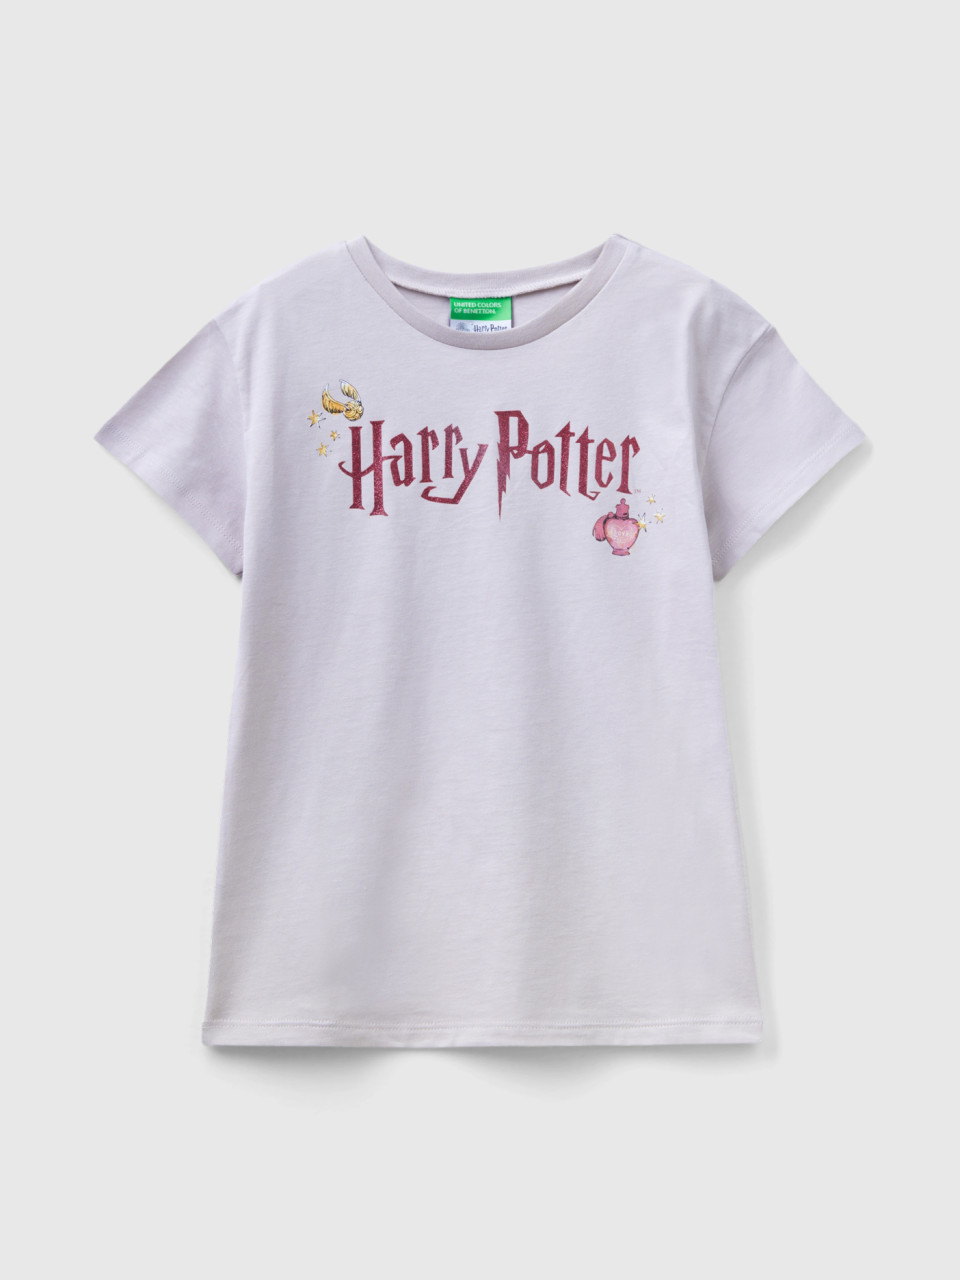 Benetton, Short Sleeve Harry Potter T-shirt, Light Gray, Kids